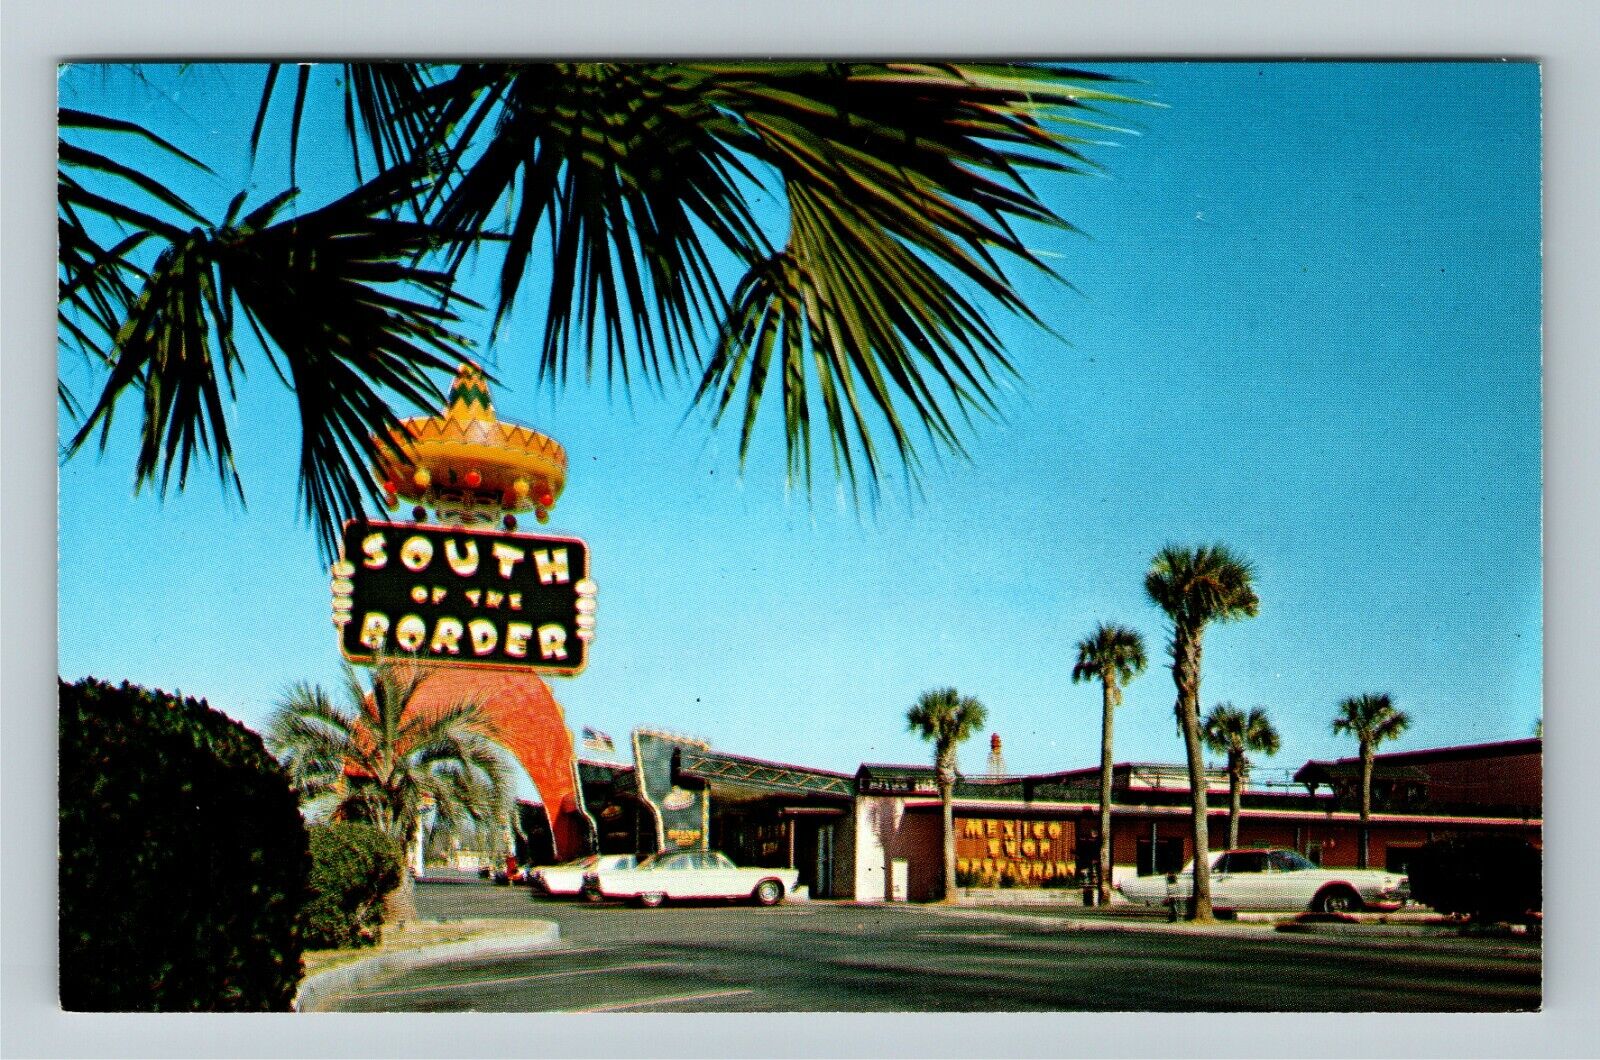 South The Border SC-South Carolina, Pedro's Restaurant, Vintage Postcard